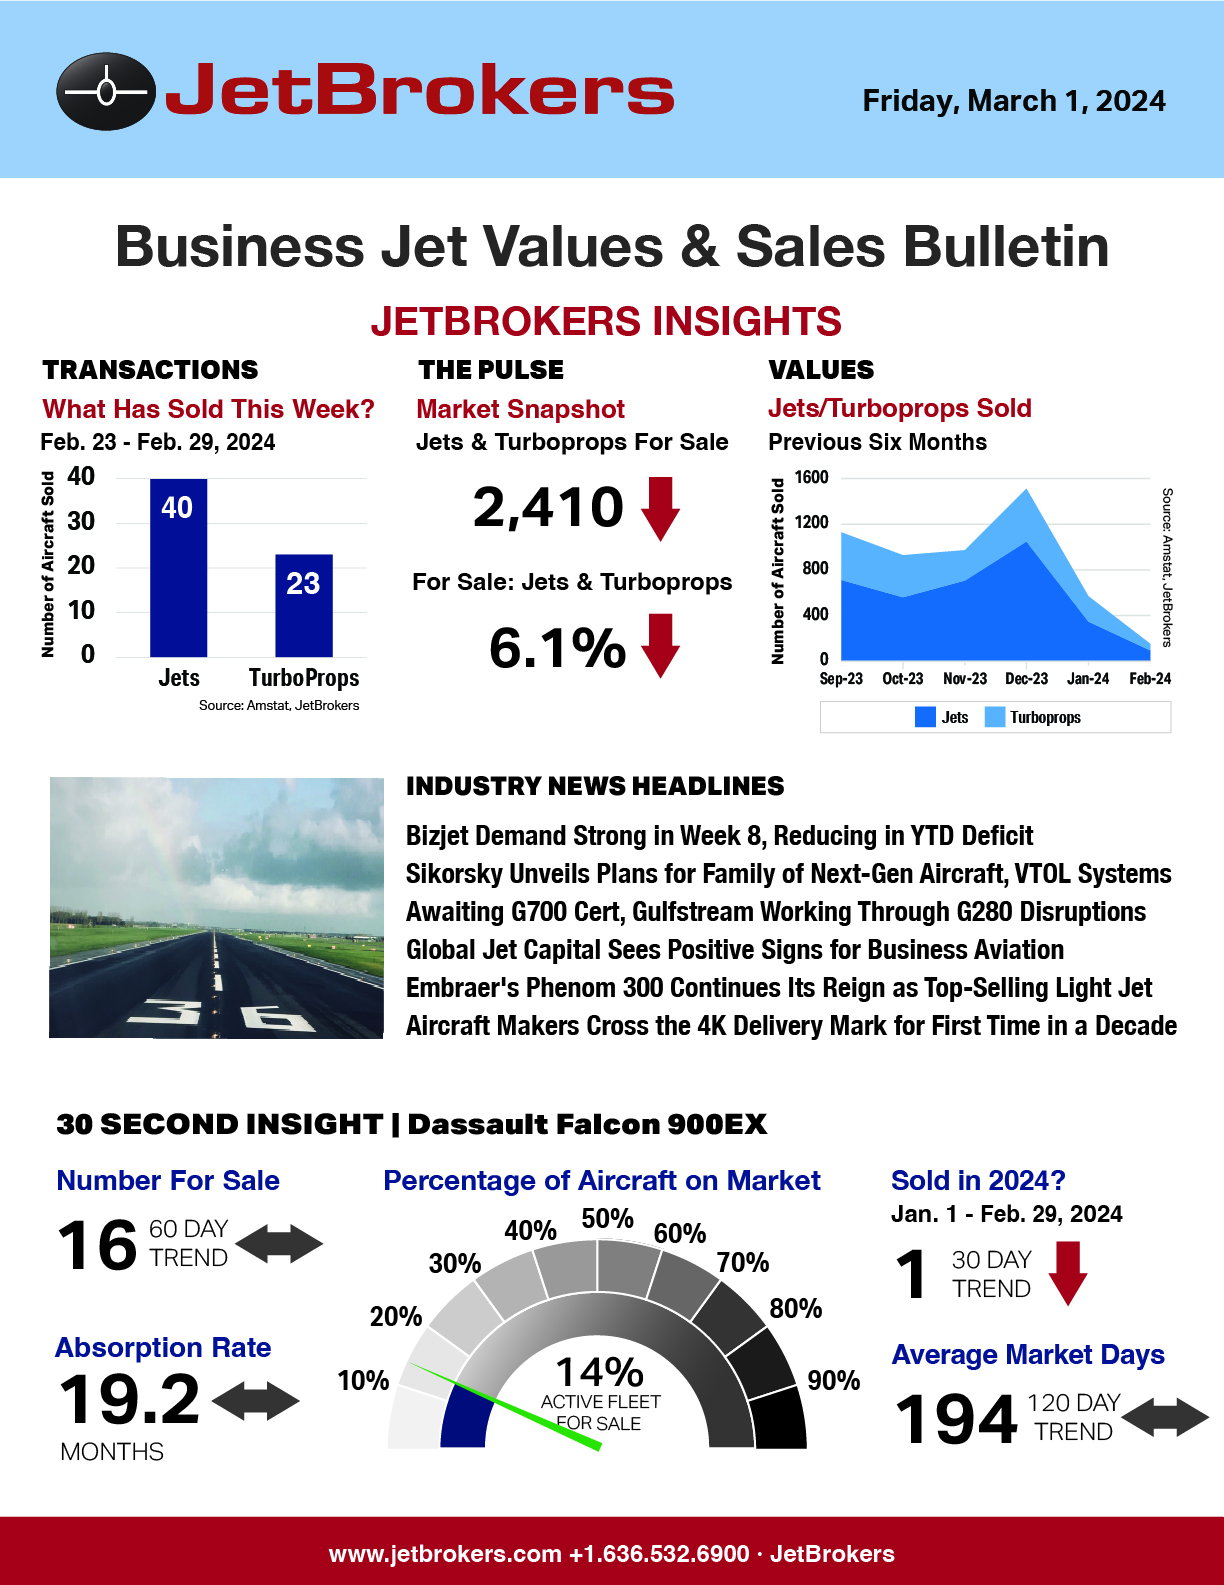 JetBrokers Business Jet Values & Sales Bulletin - March 1, 2024